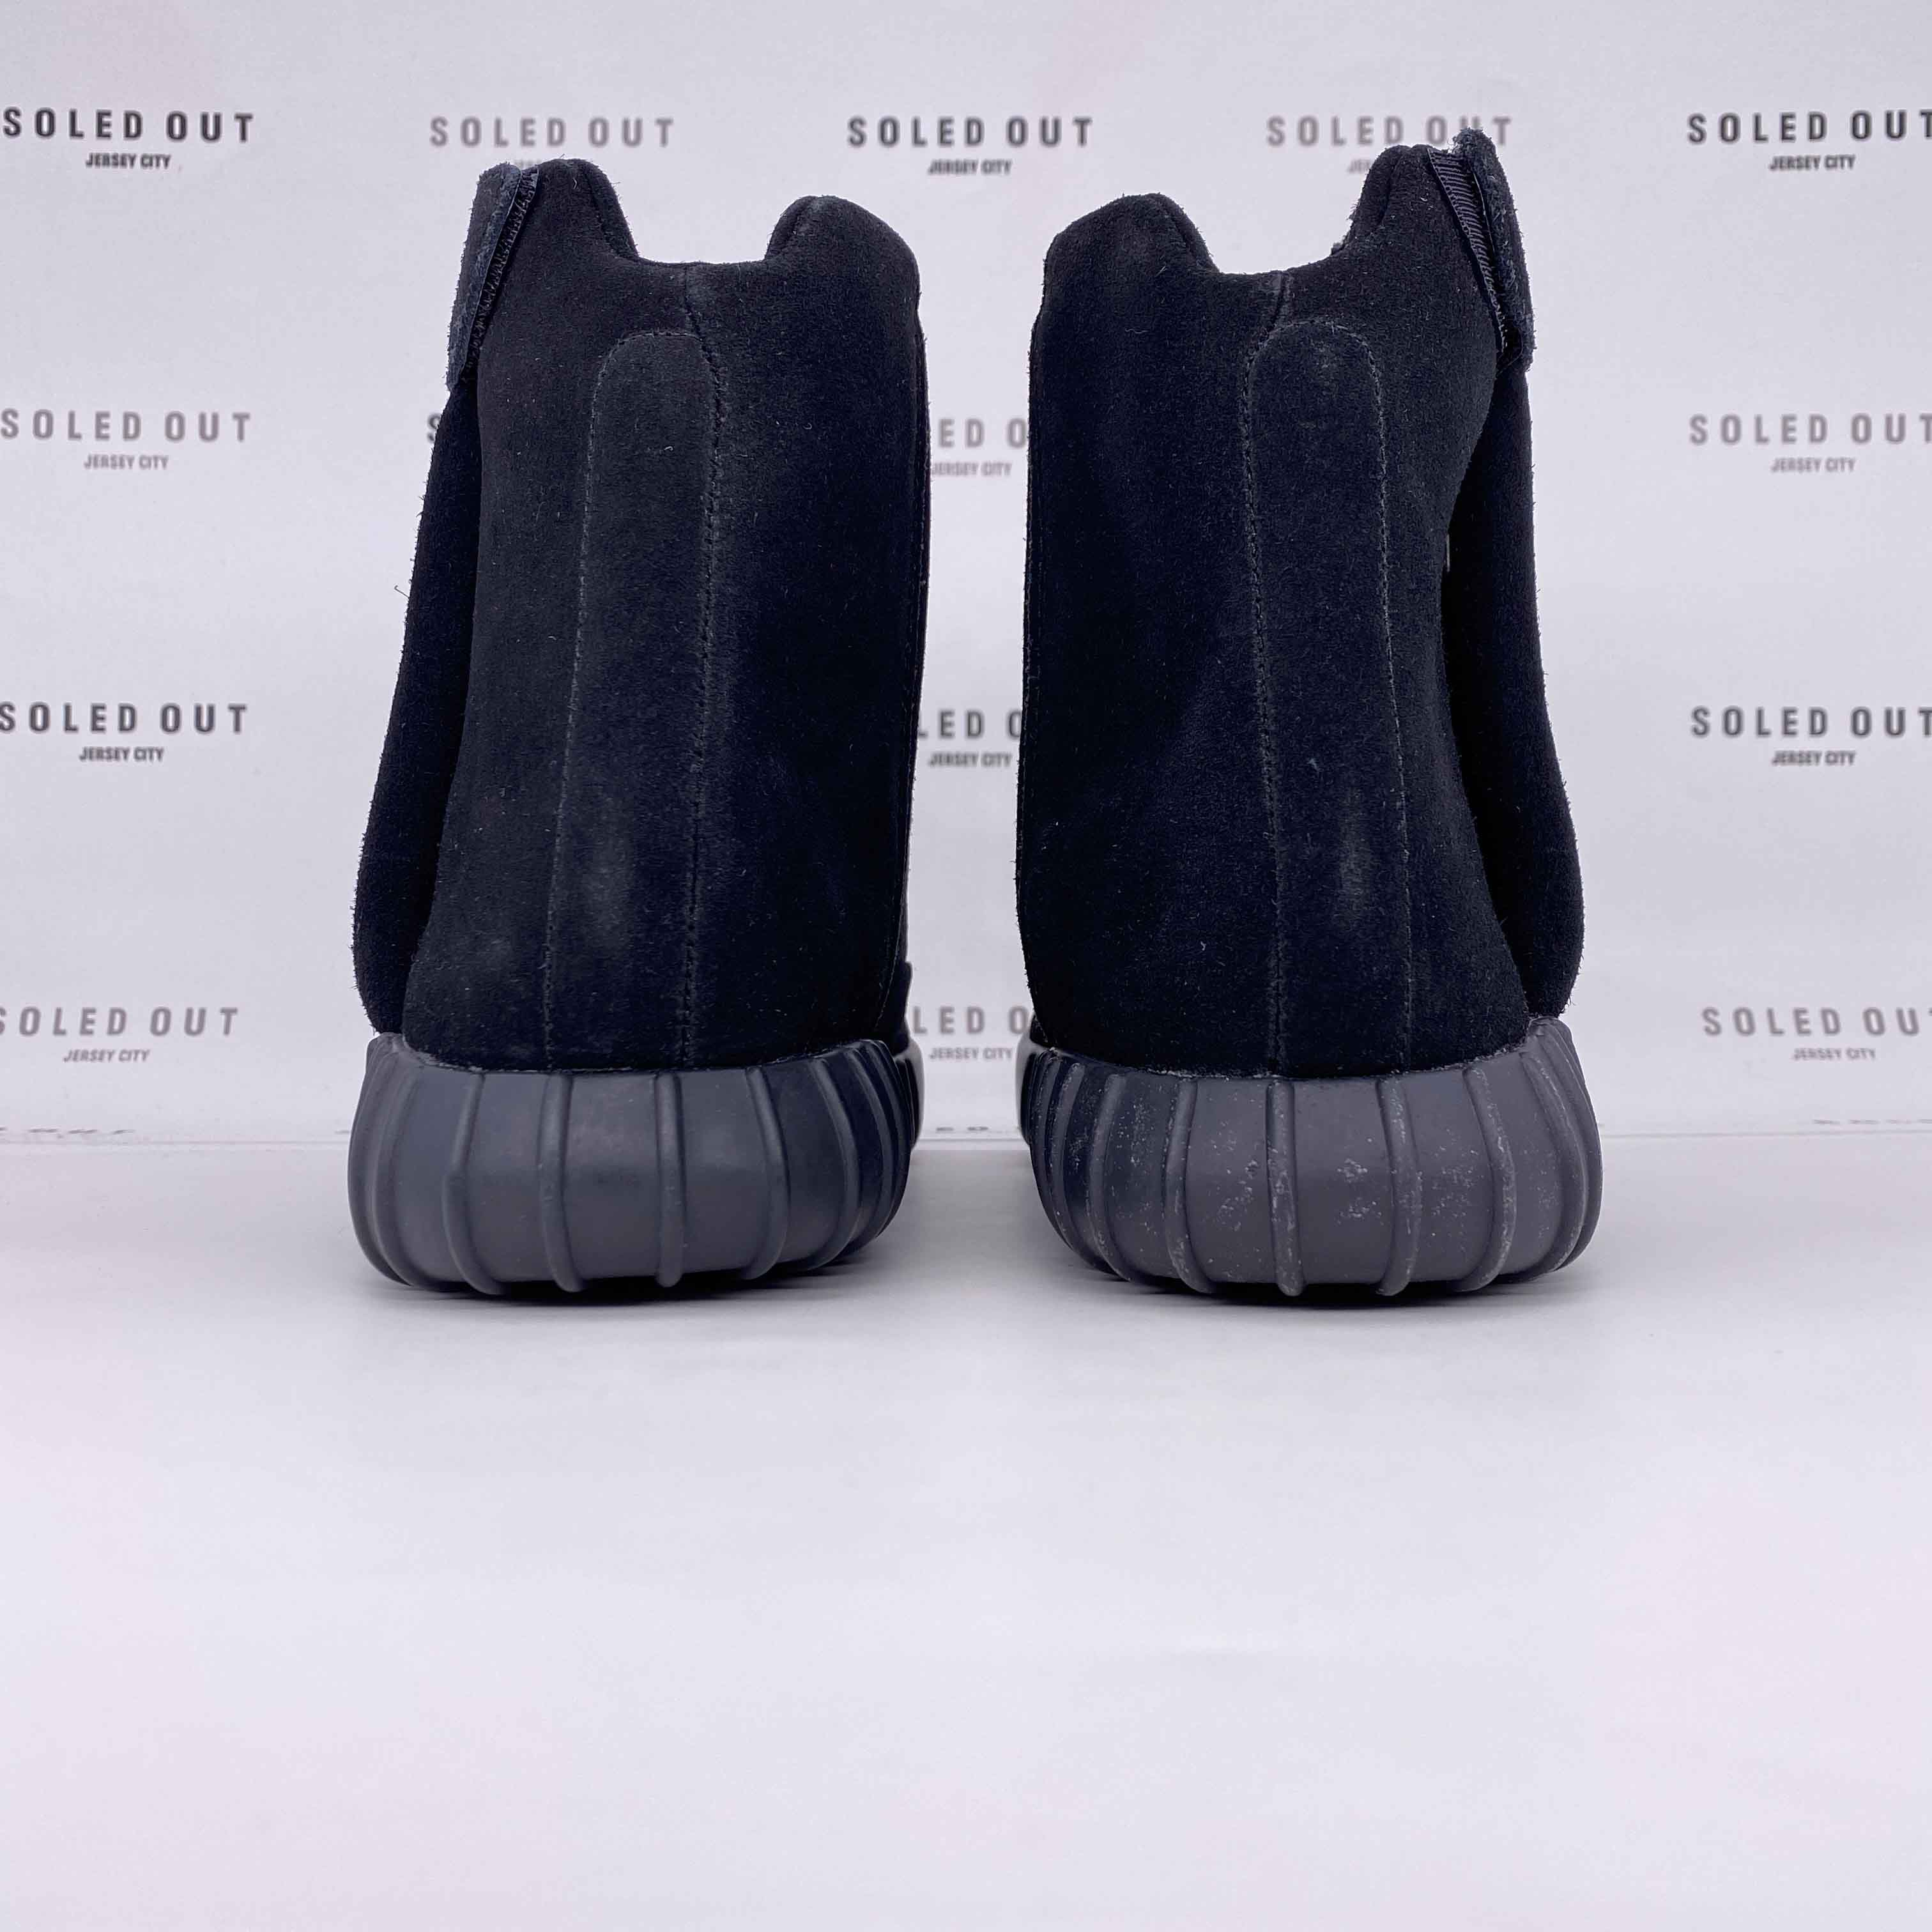 Yeezy 750 "Triple Black" 2015 New (Cond) Size 7